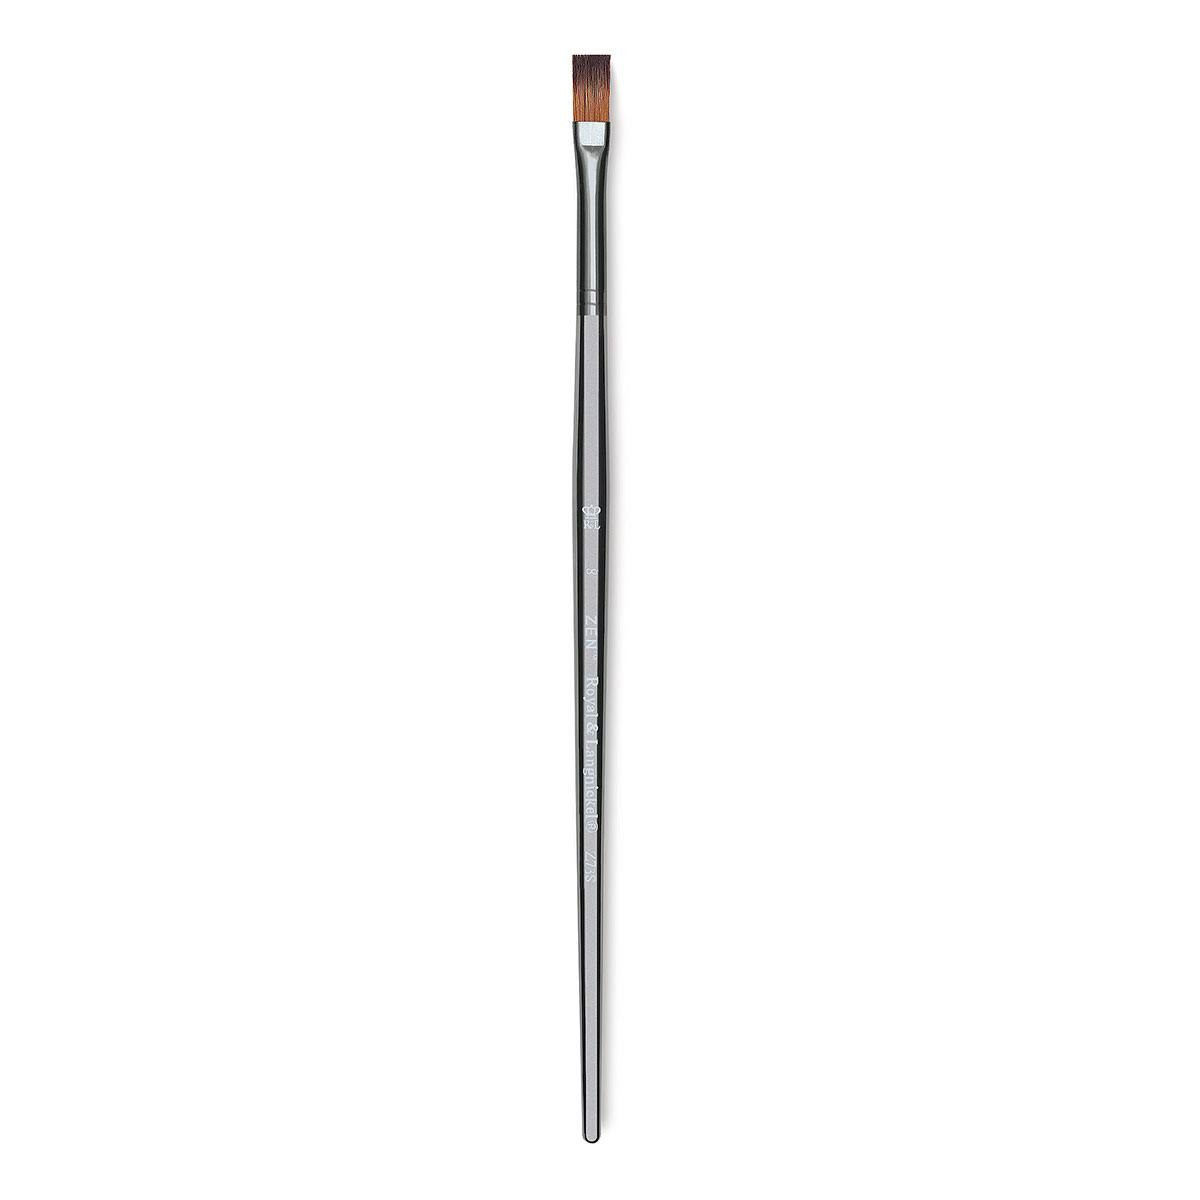 Royal & Langnickel Zen Brush - Flat Shader, Size 8, Short Handle